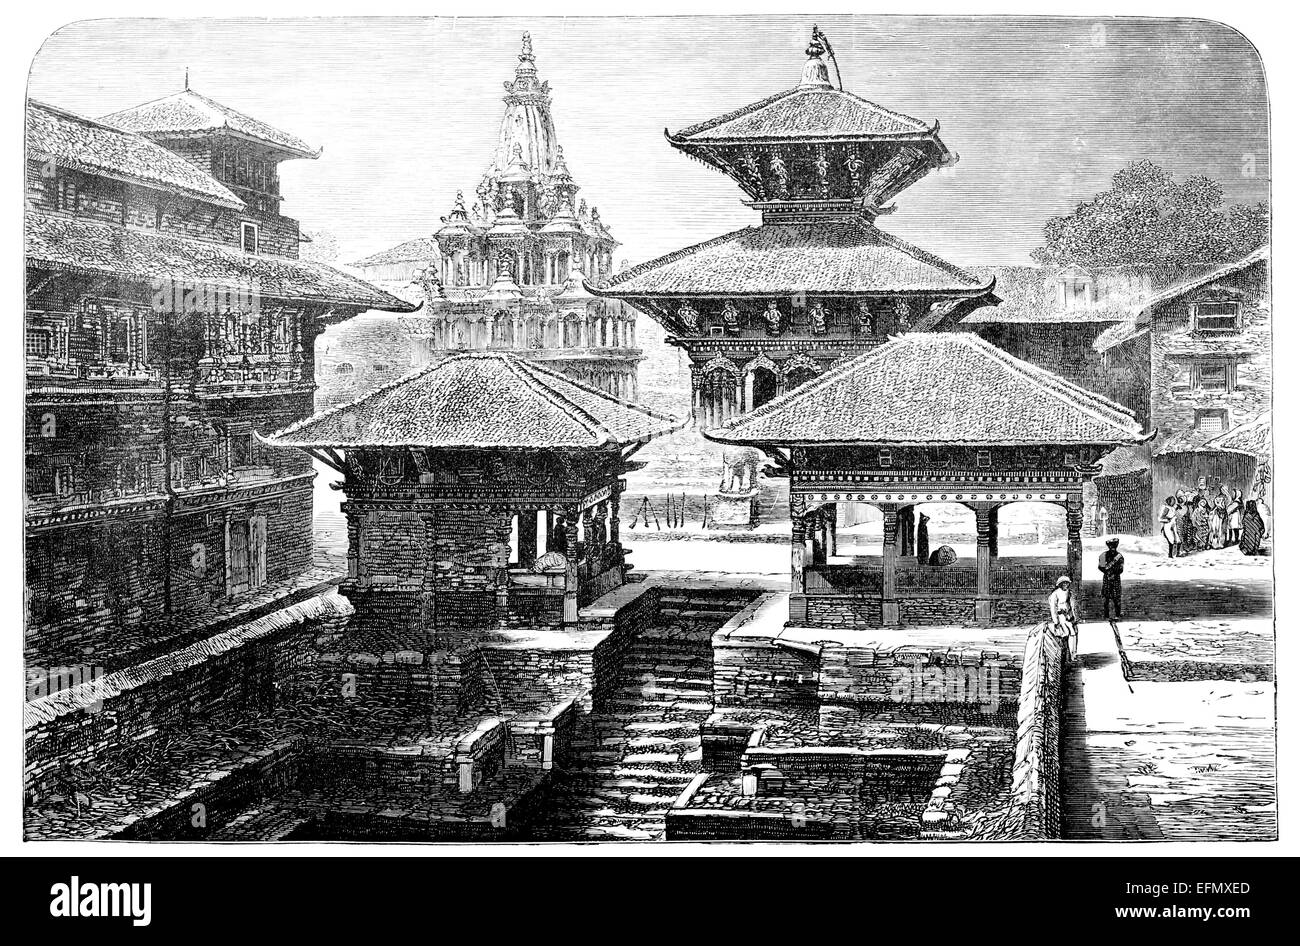 Nepal - Pashupatinath - Overview - 43c | The Pashupatinath T… | Flickr